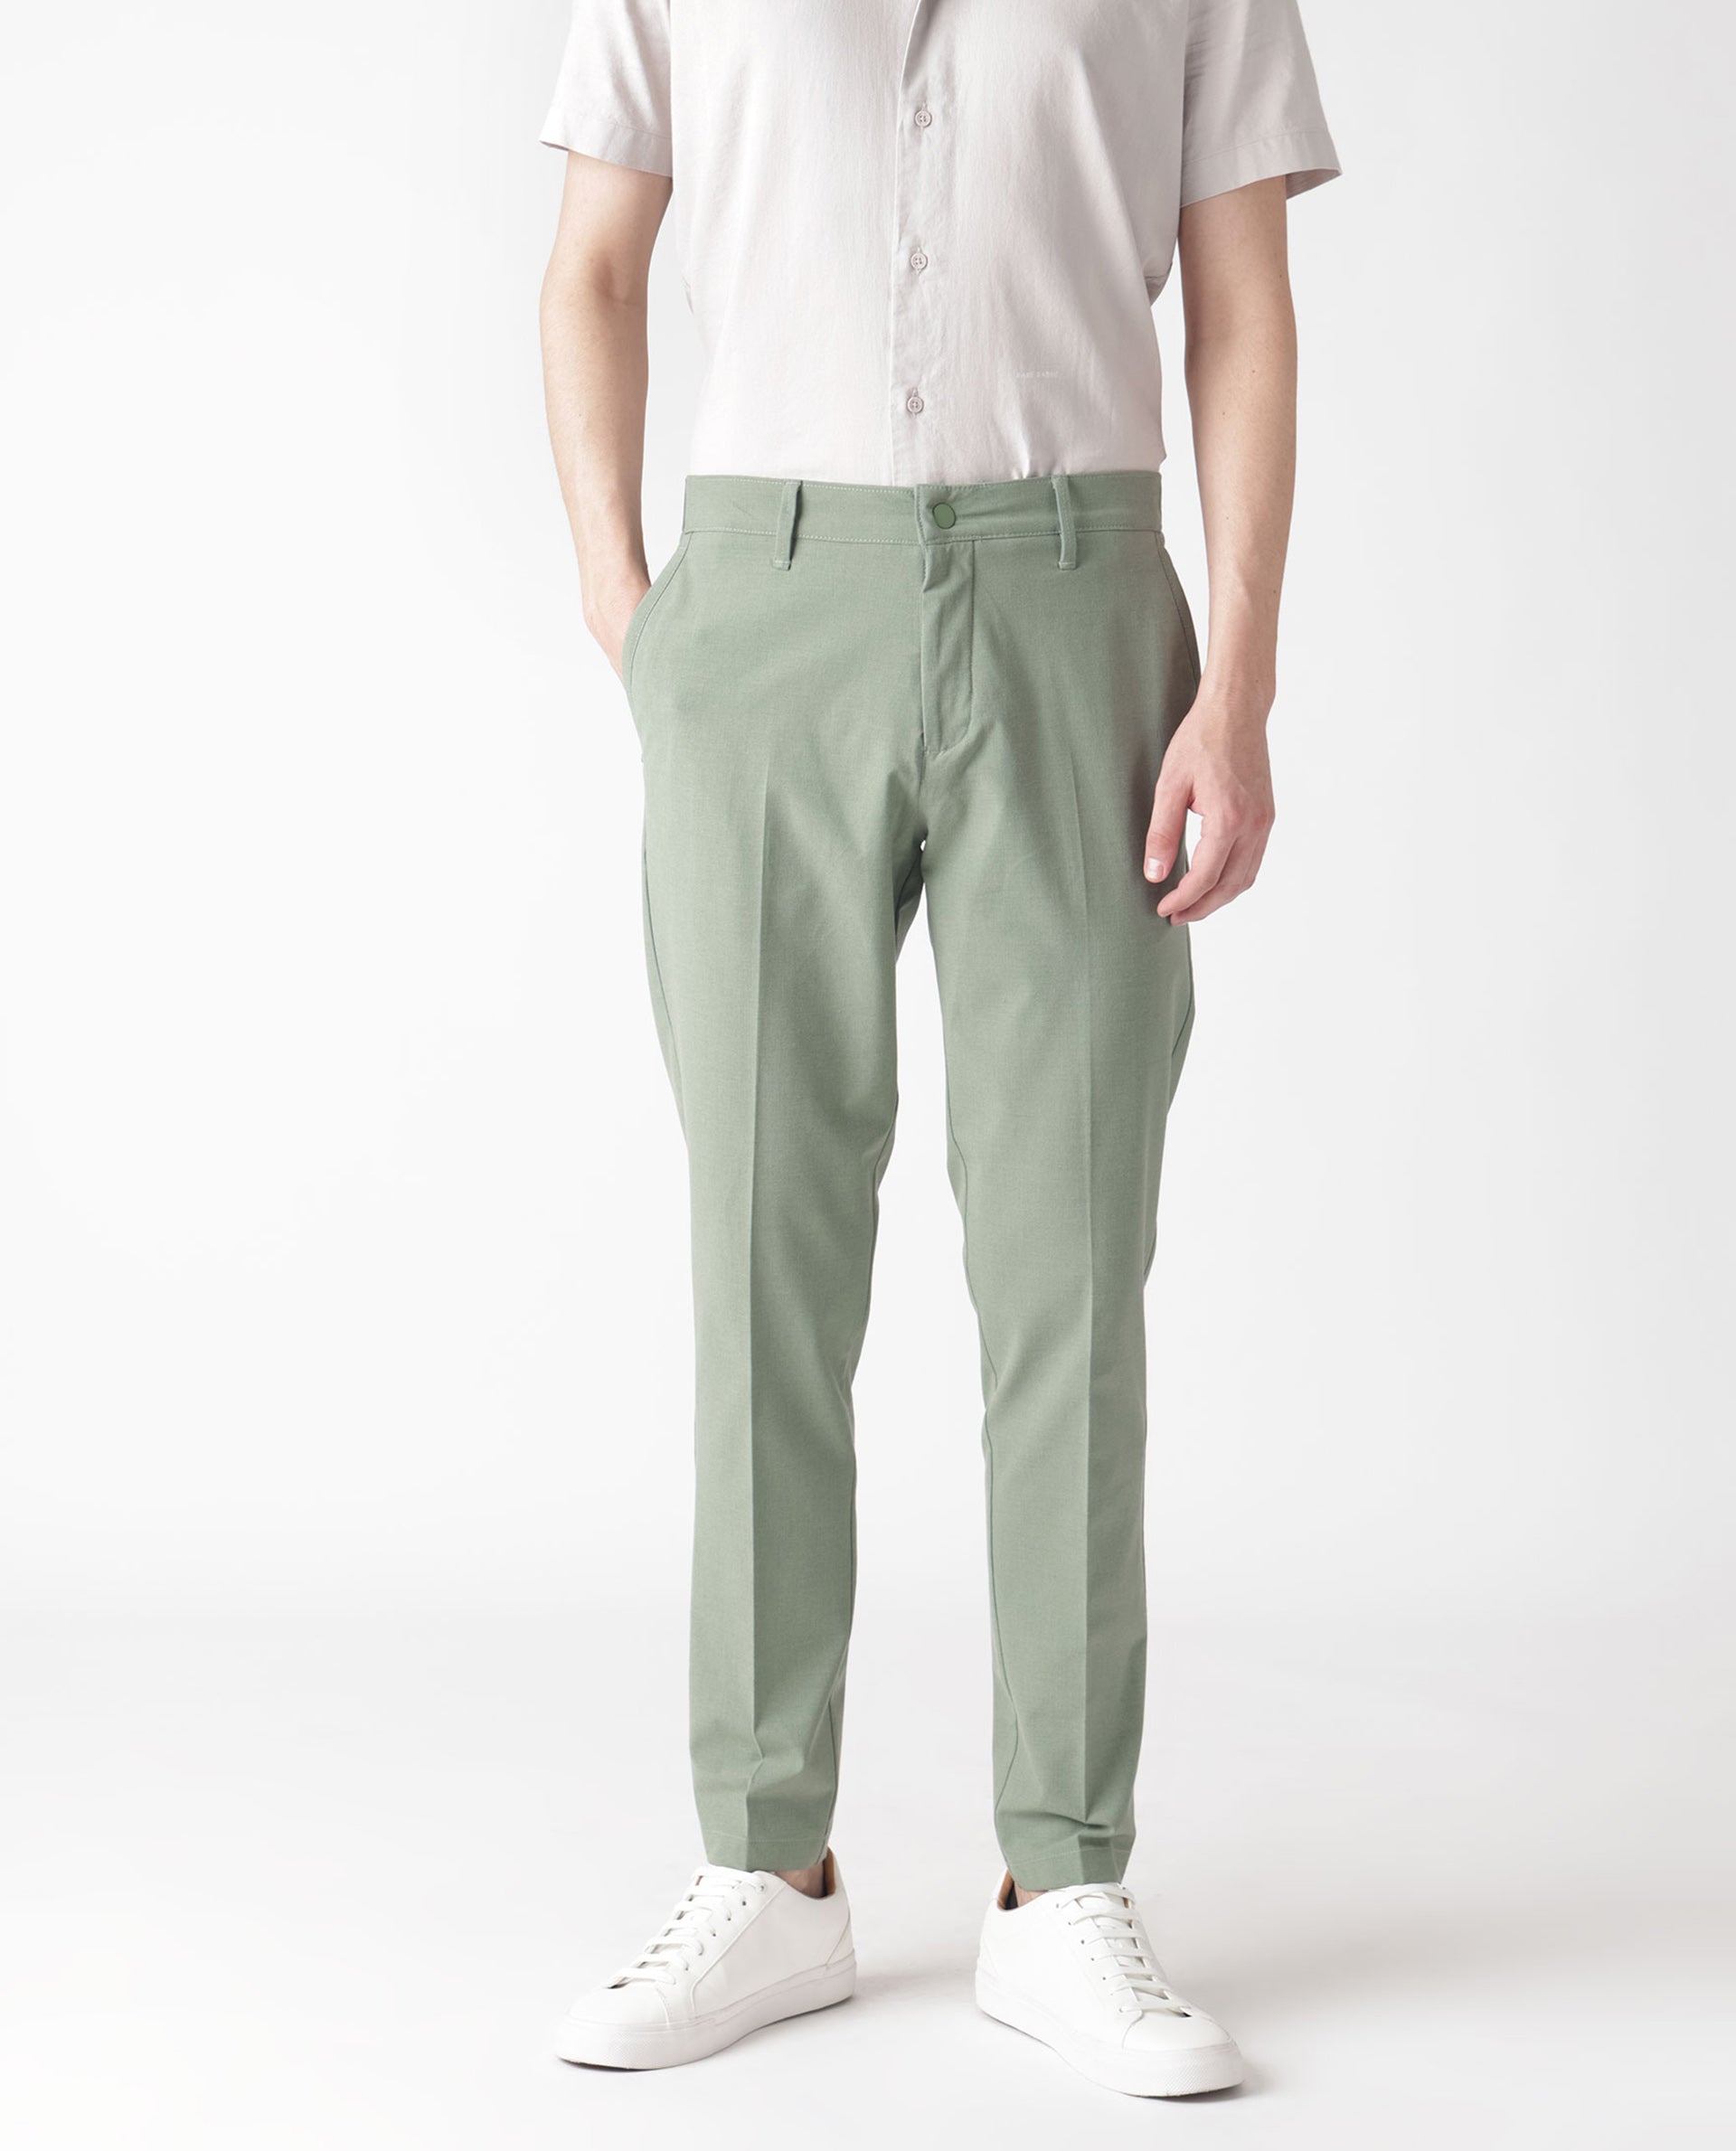 Sailsbury Linen Green pants | Casual wedding attire, Summer wedding attire  guest, Mens casual wedding attire